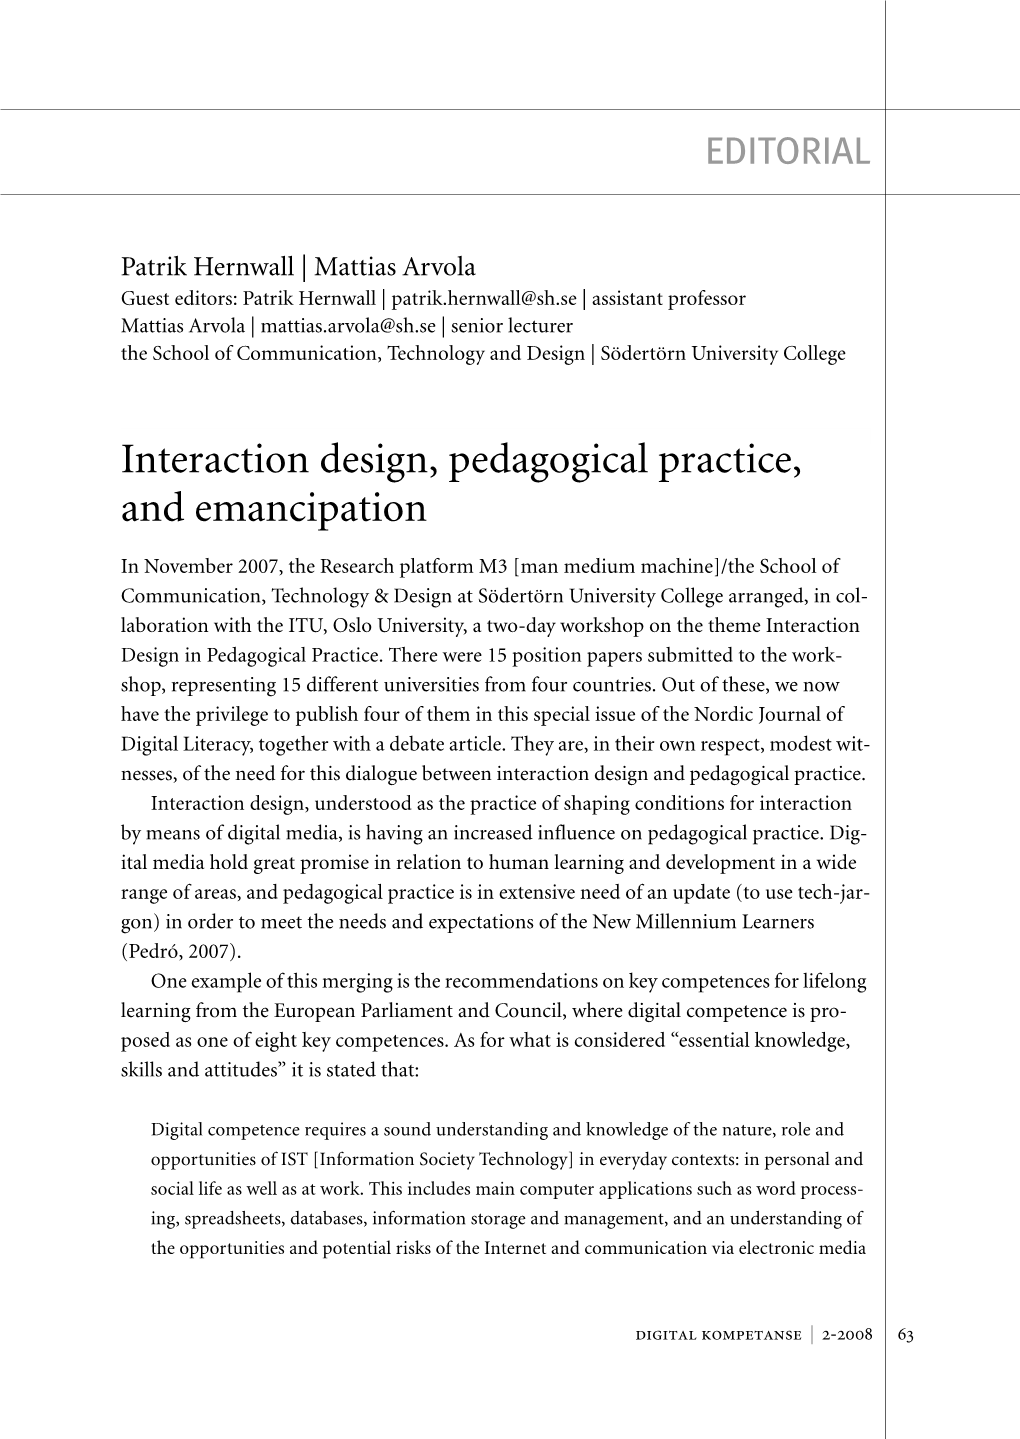 Interaction Design, Pedagogical Practice, and Emancipation